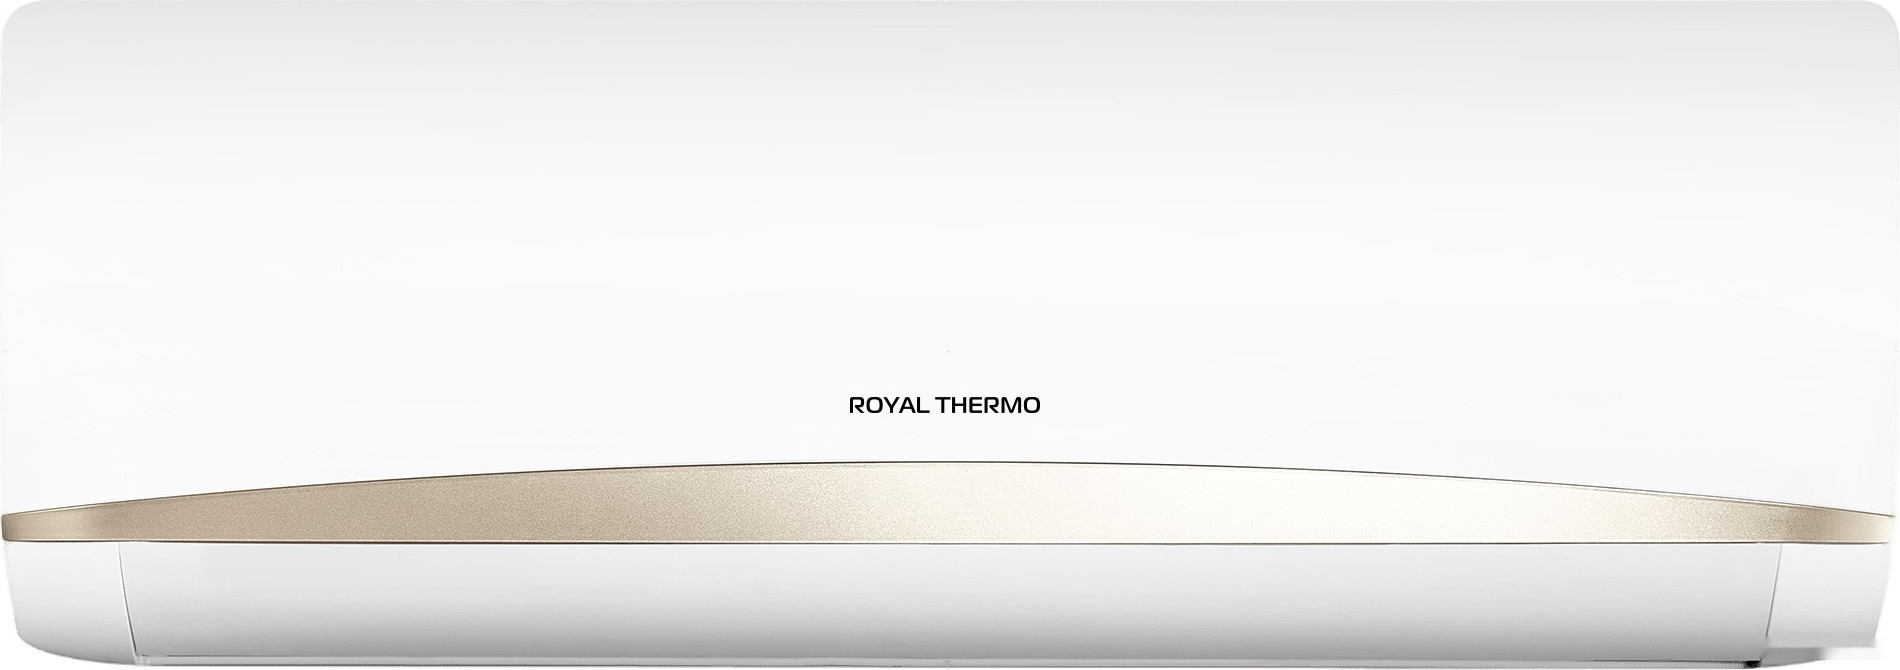 кондиционер royal thermo perfecto rtp-09hn1